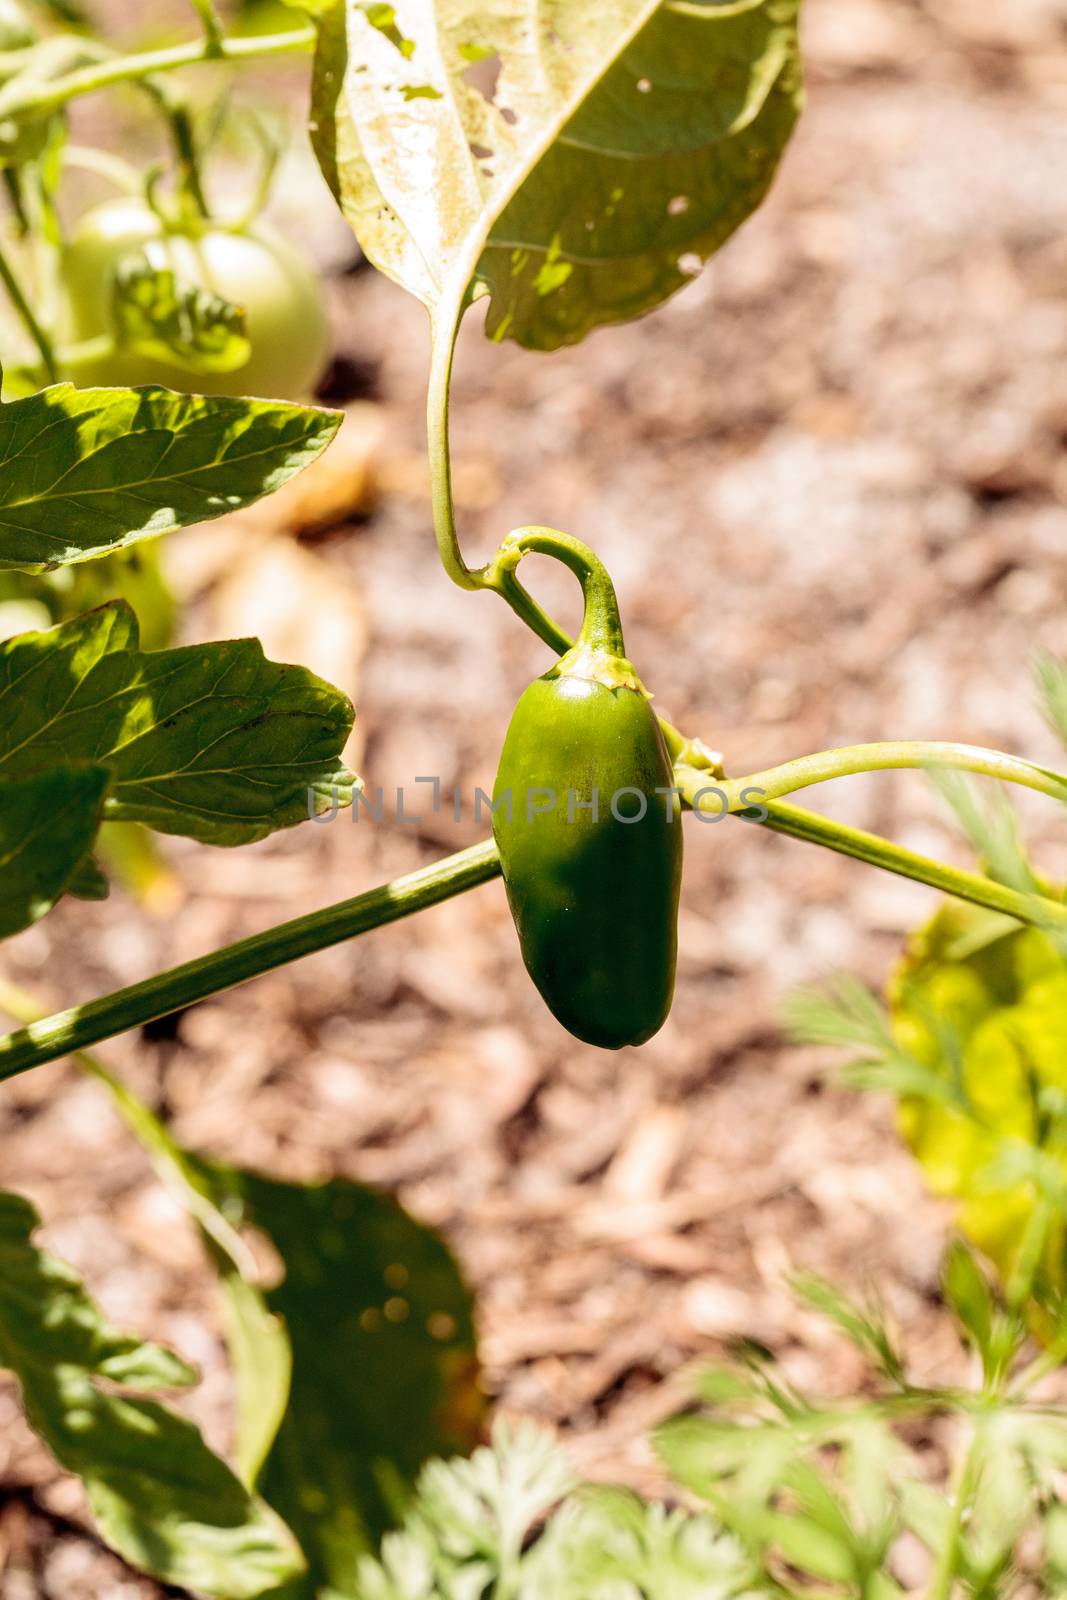 Cheyenne pepper hybrid in an organic vegetable garden in Naples, Florida